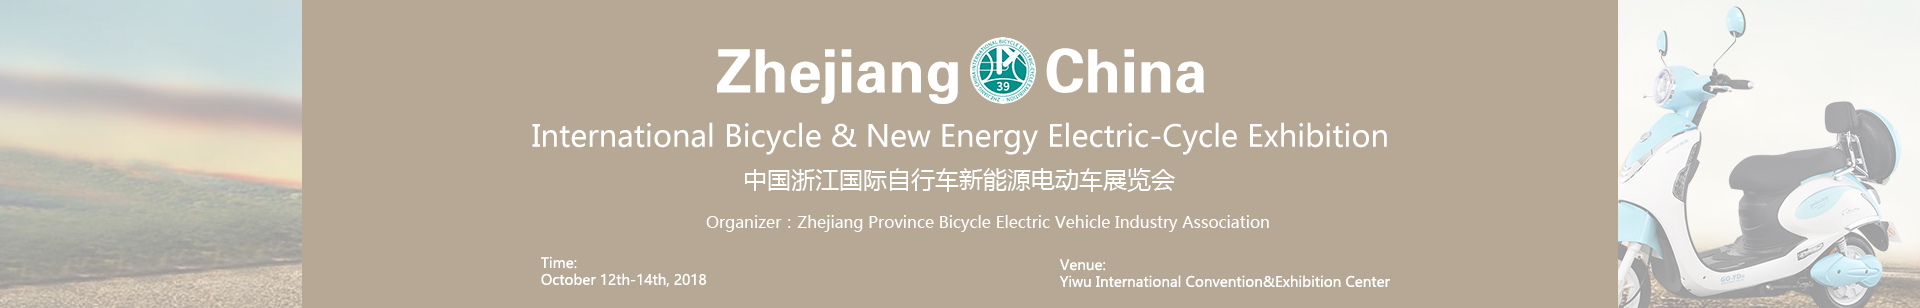 Zhejiang International Bicycle&Electric-Cycle Exhibition